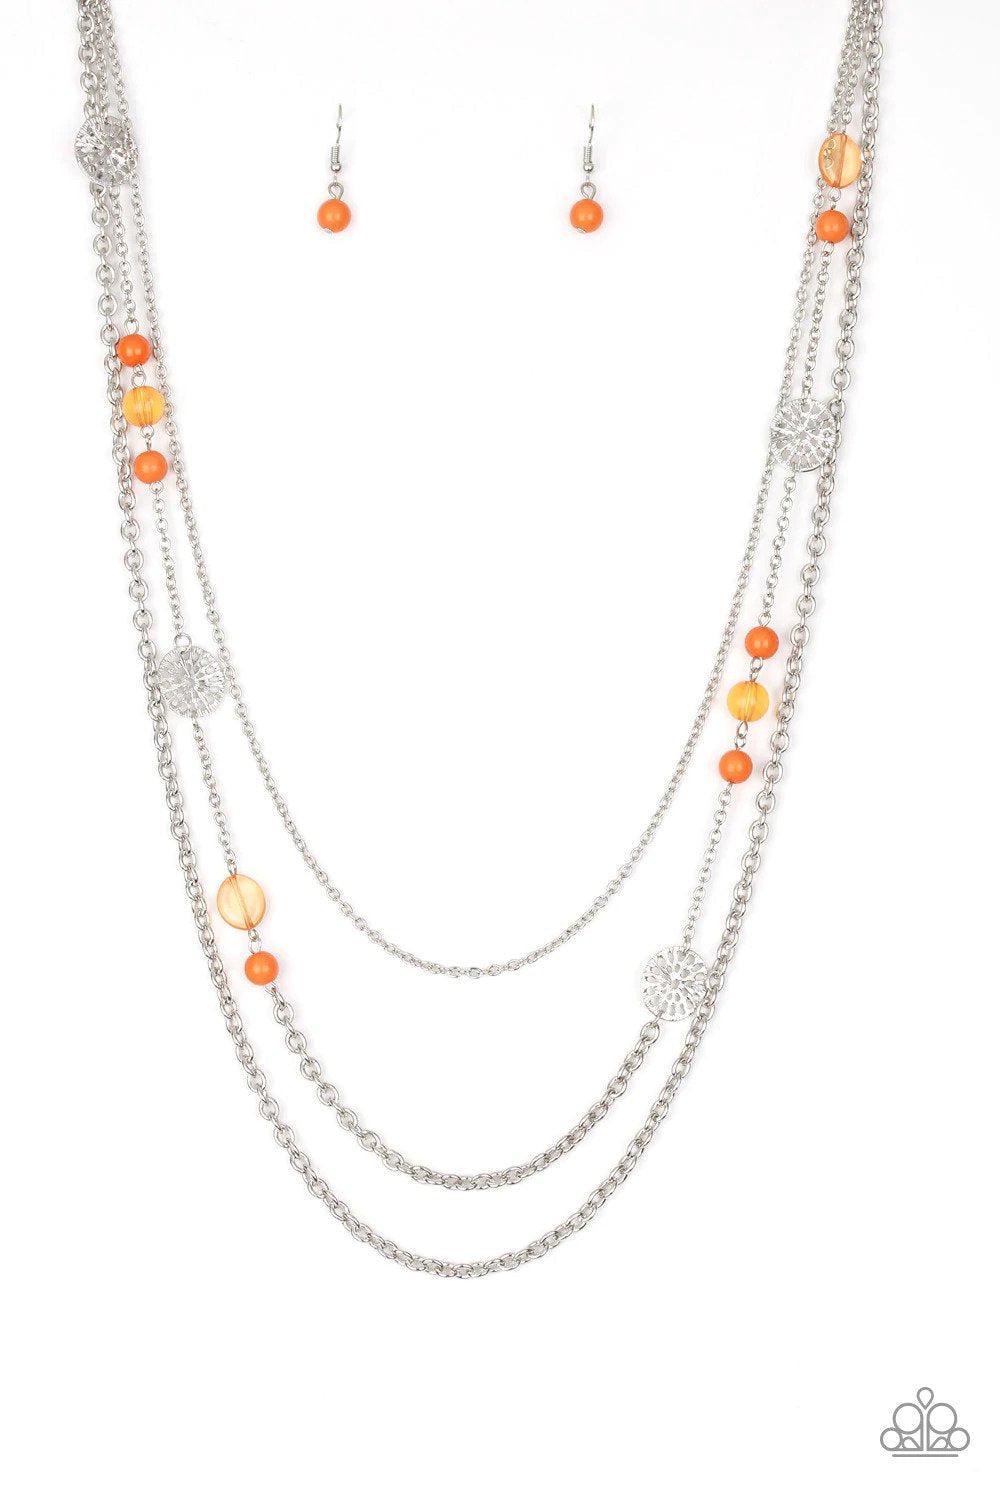 Pretty Pop-tastic! Orange Necklace - Paparazzi Accessories- lightbox - CarasShop.com - $5 Jewelry by Cara Jewels